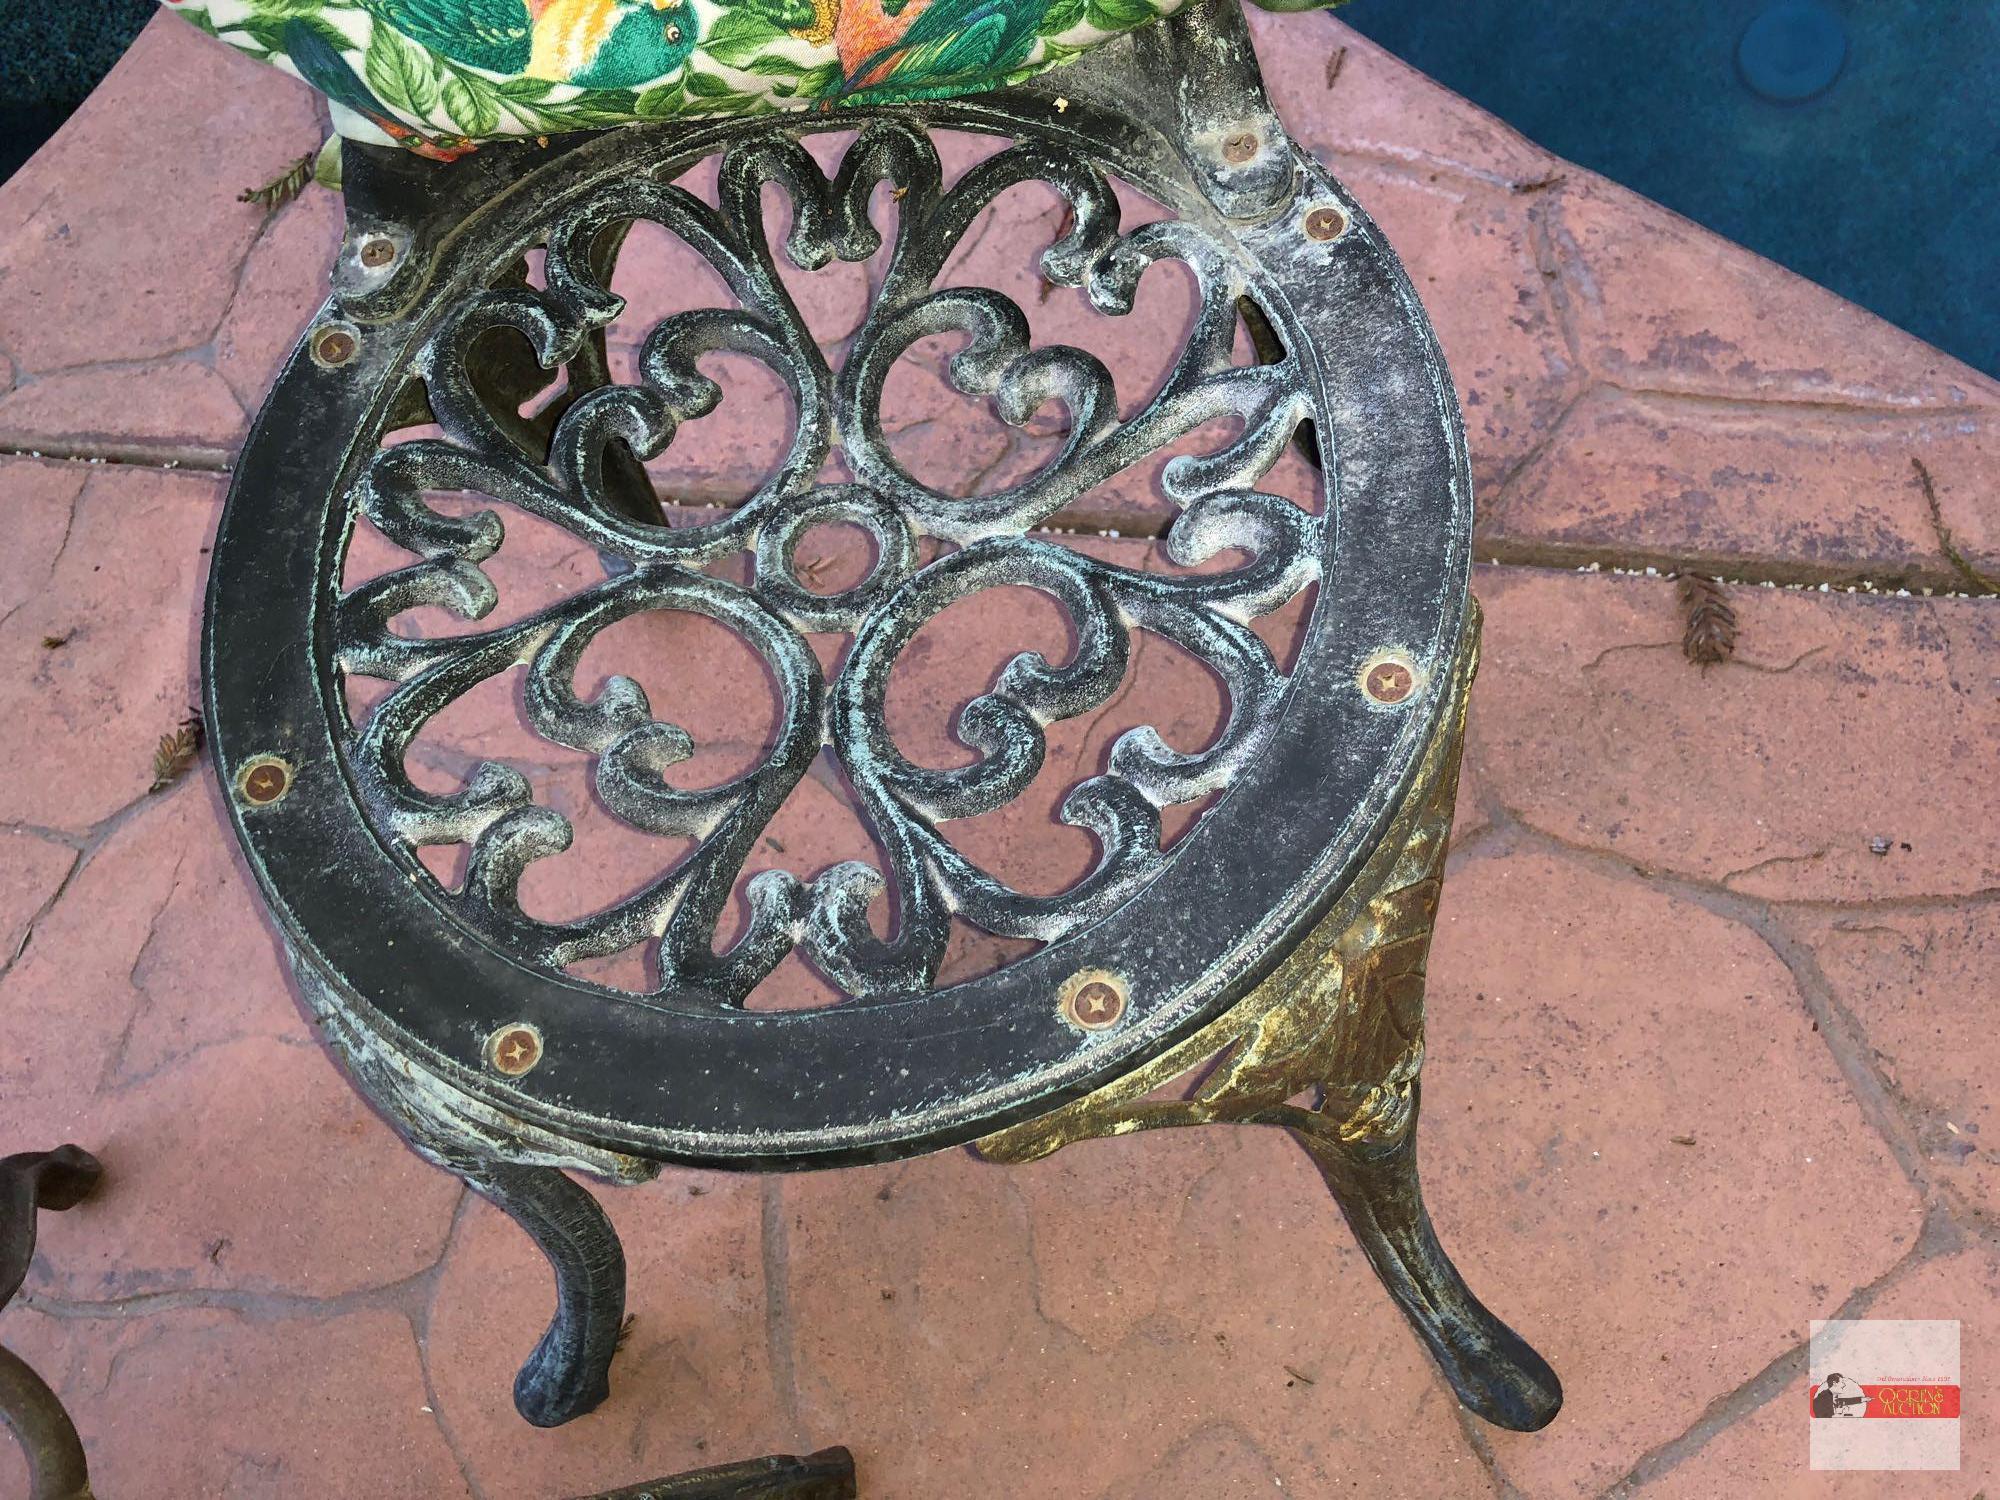 Yard & Garden - cast aluminum bistro table & 2 chairs, grapes motif, 24"wx26"h